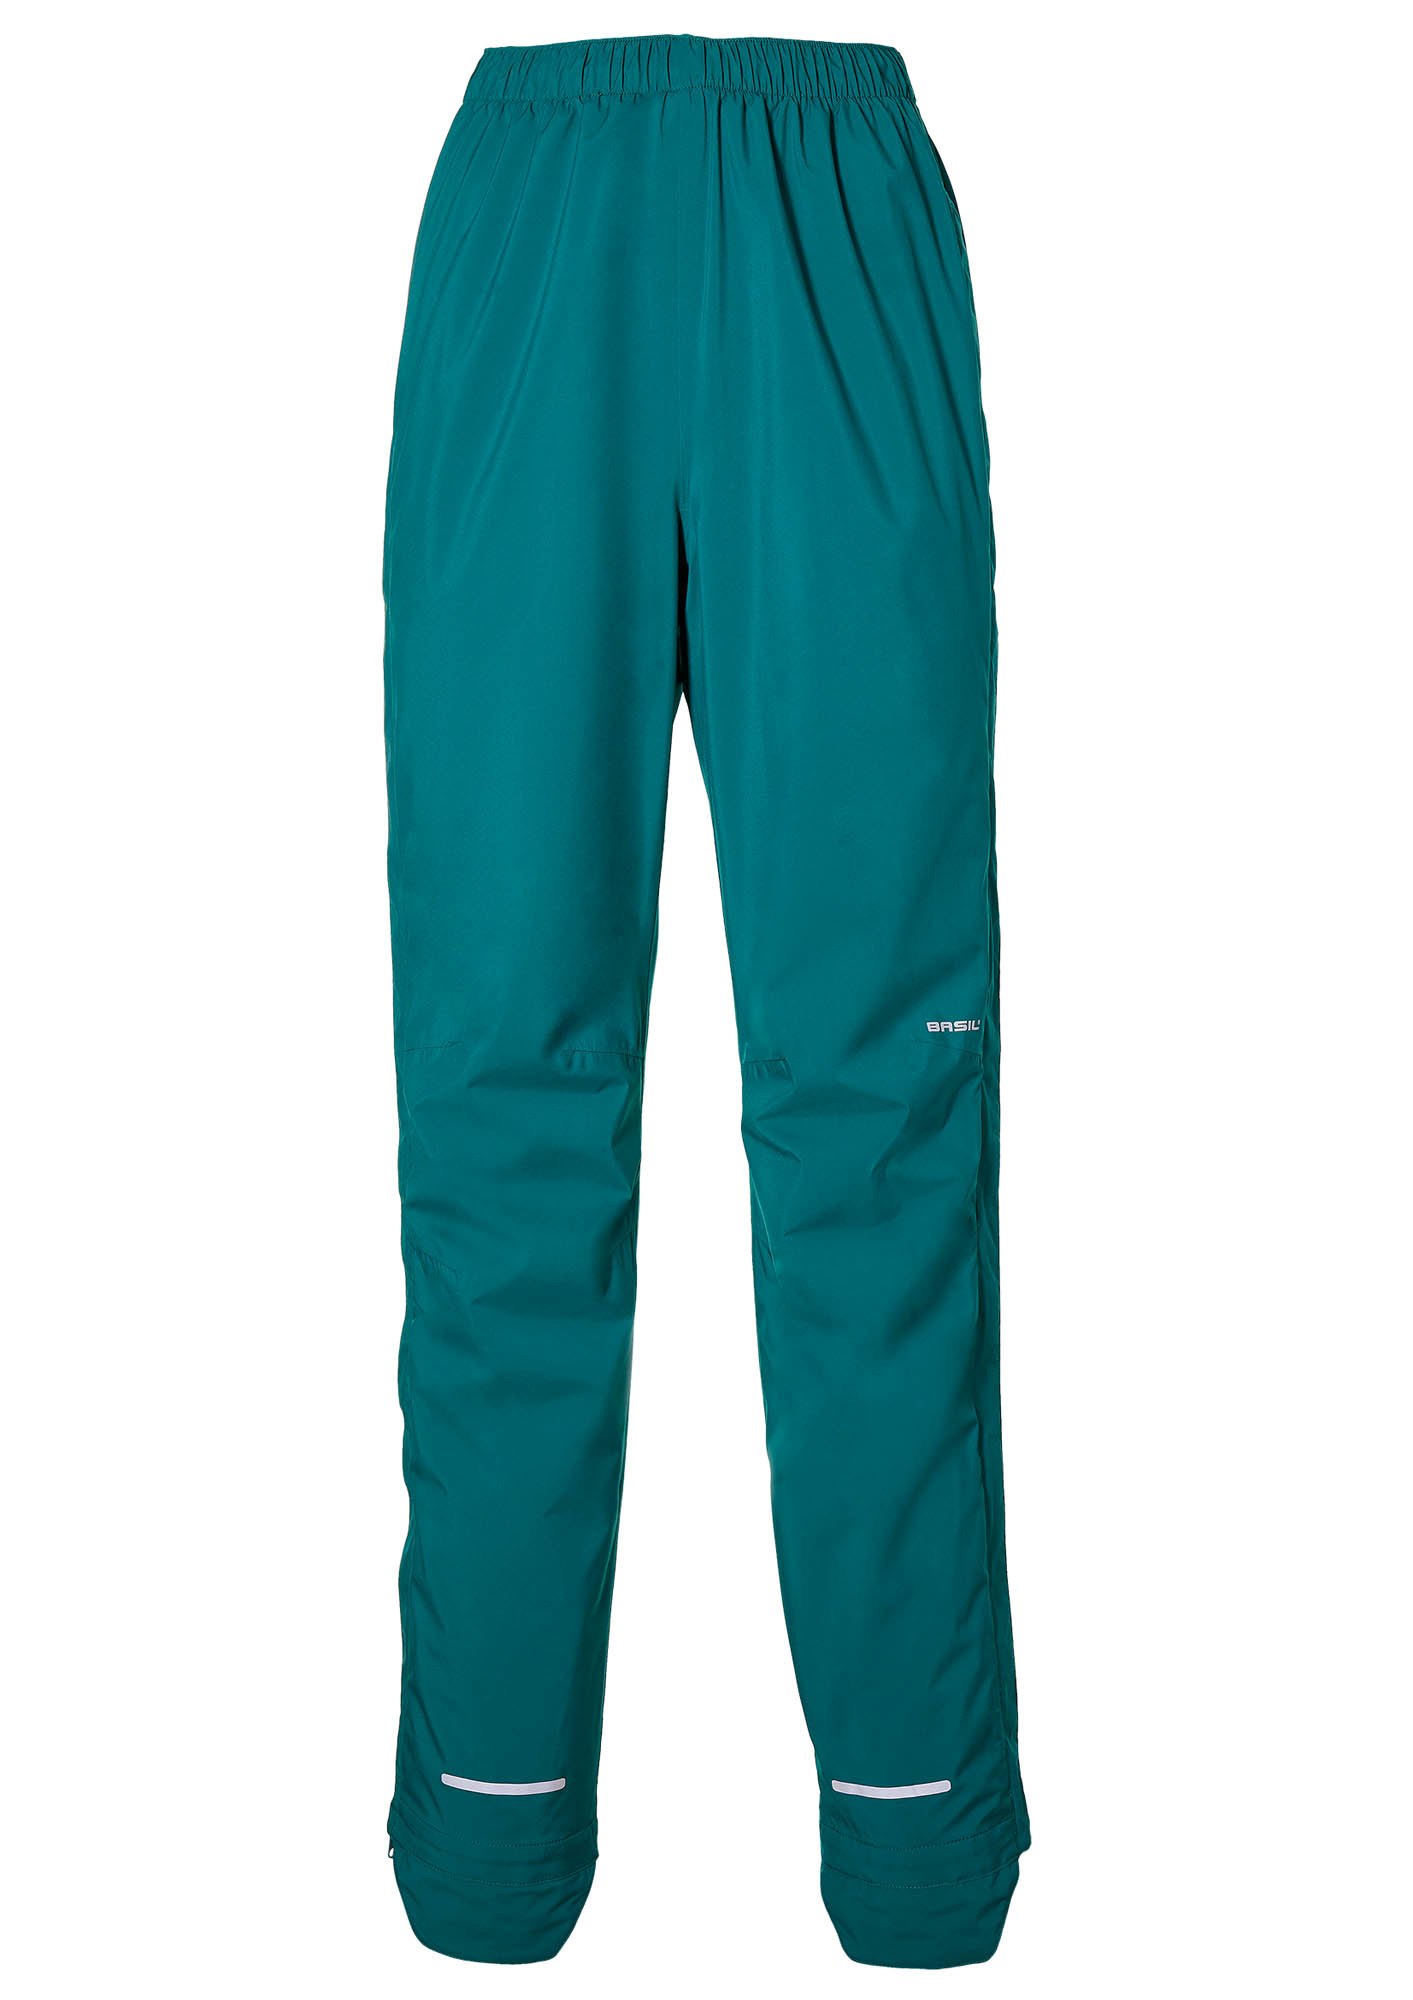 Rain trousers esmotion 2020 superflex greenseagreen  Strauss